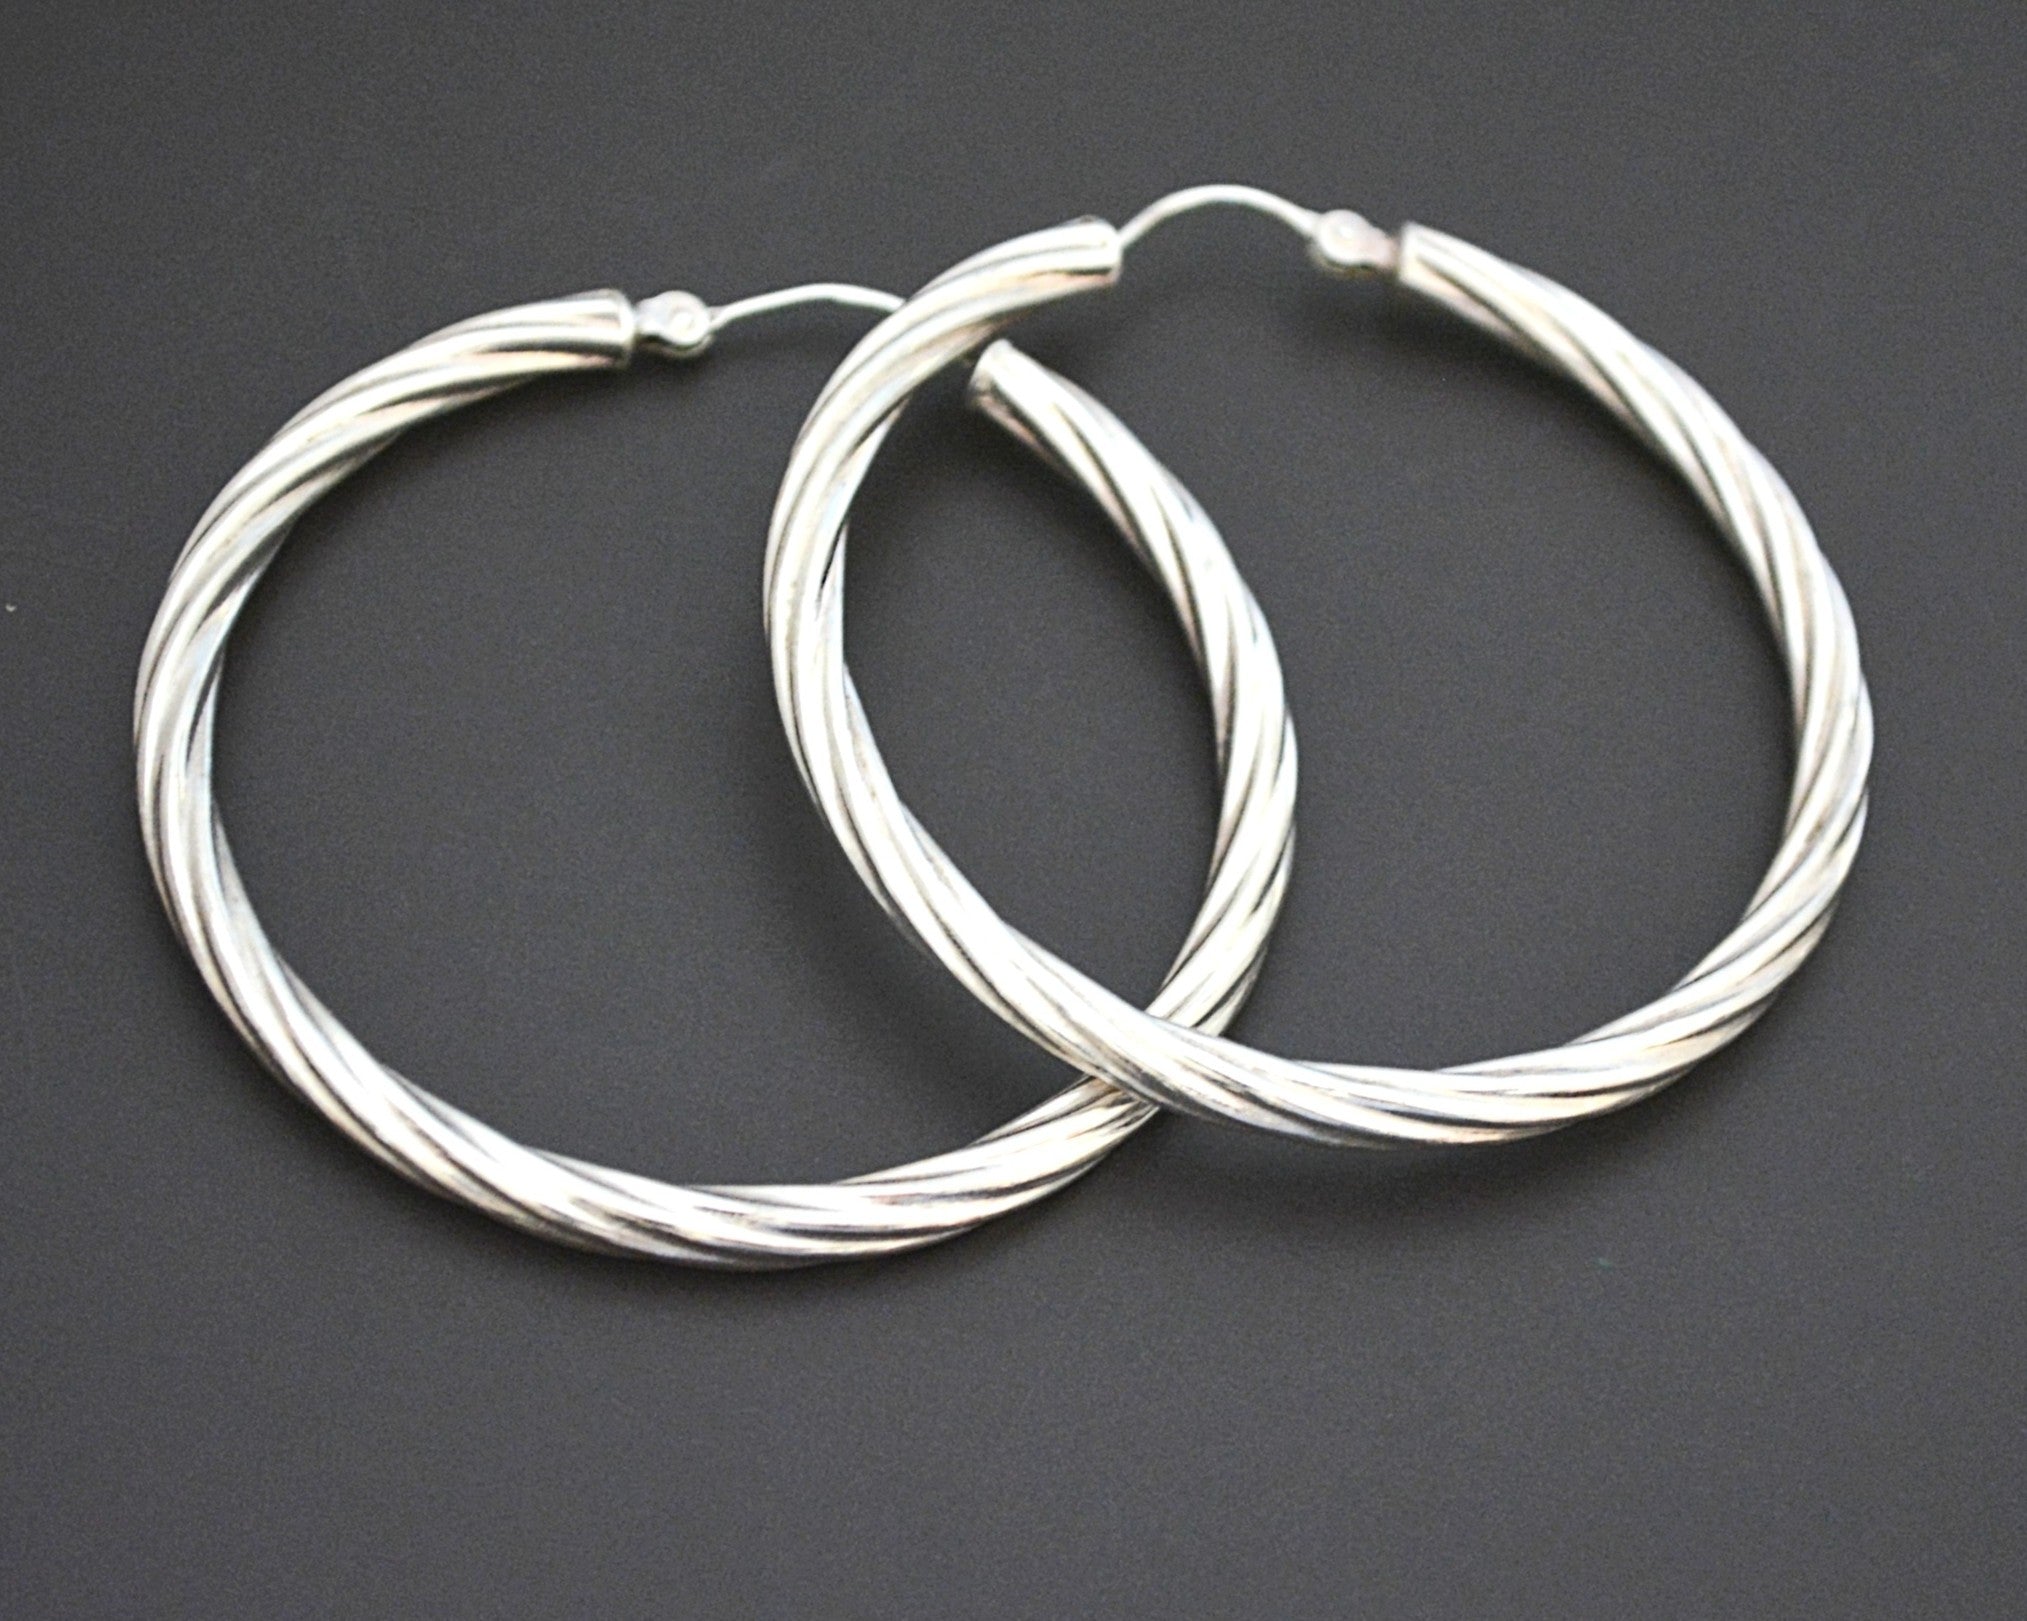 Ethnic Twisted Silver Hoop Earrings - LARGE